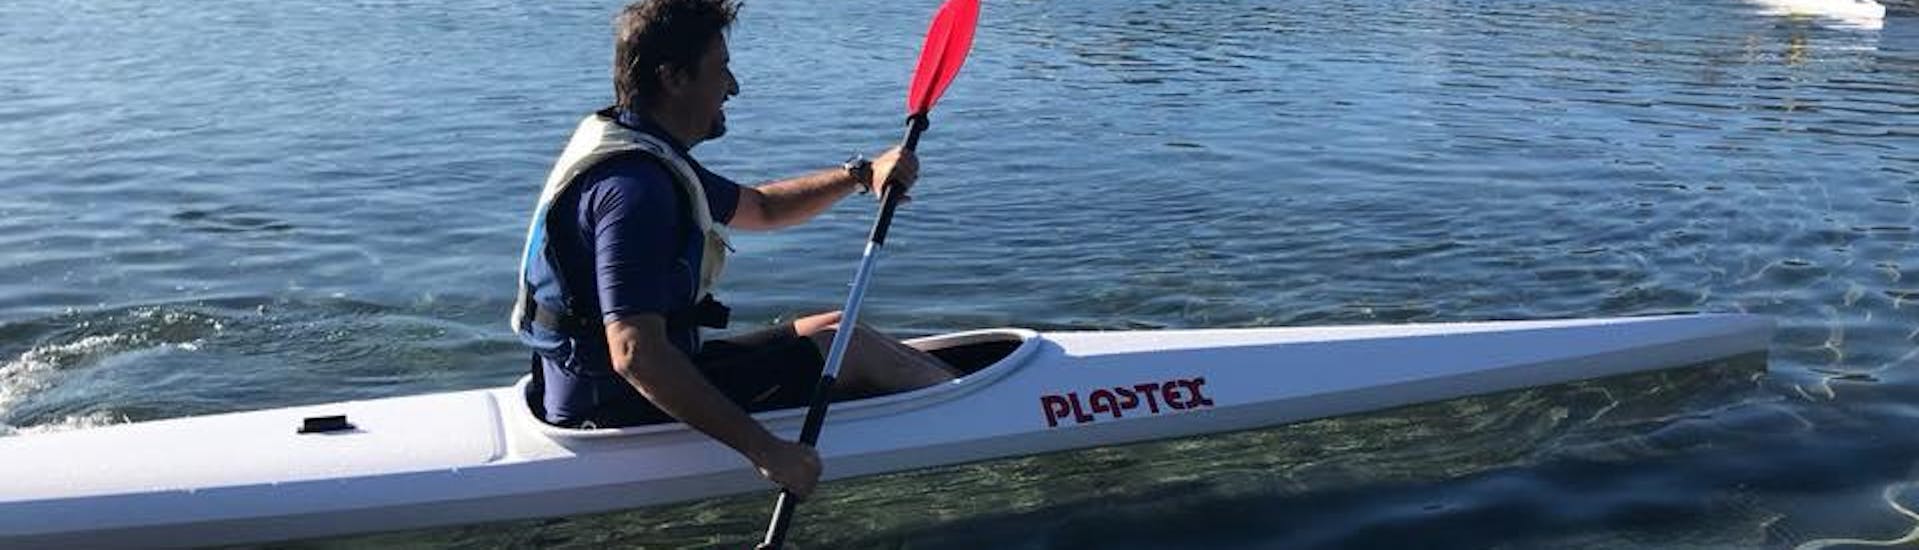 Eenvoudige kajakken & kanoën in Rome - Lake Albano.